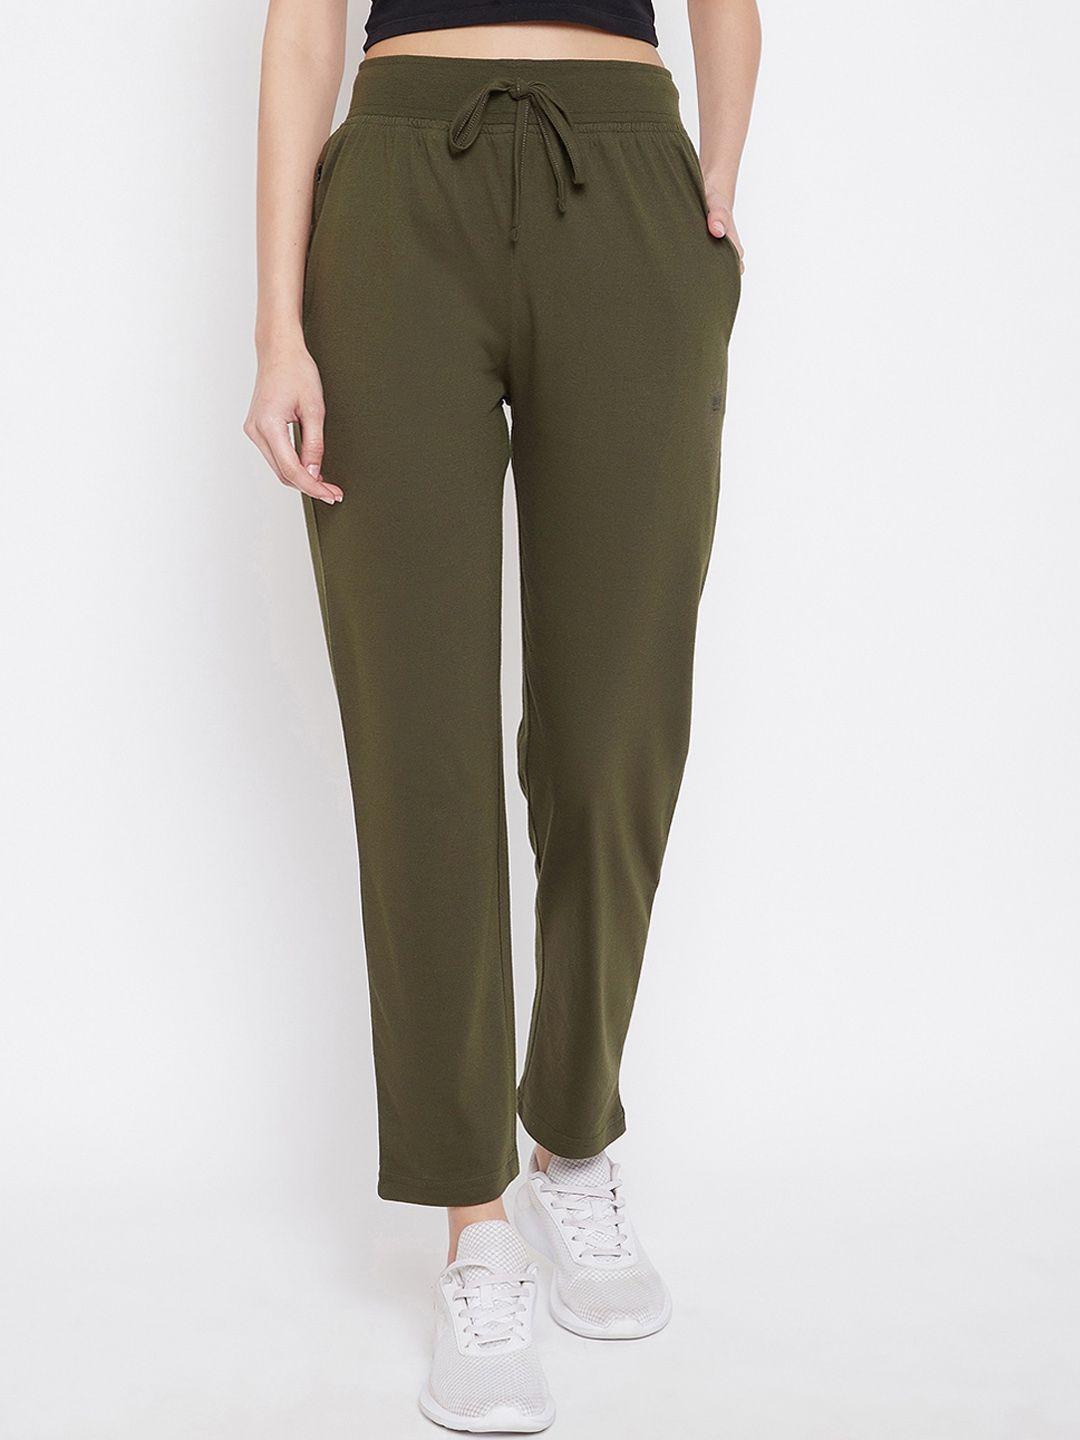 okane-women-olive-green-solid-track-pants